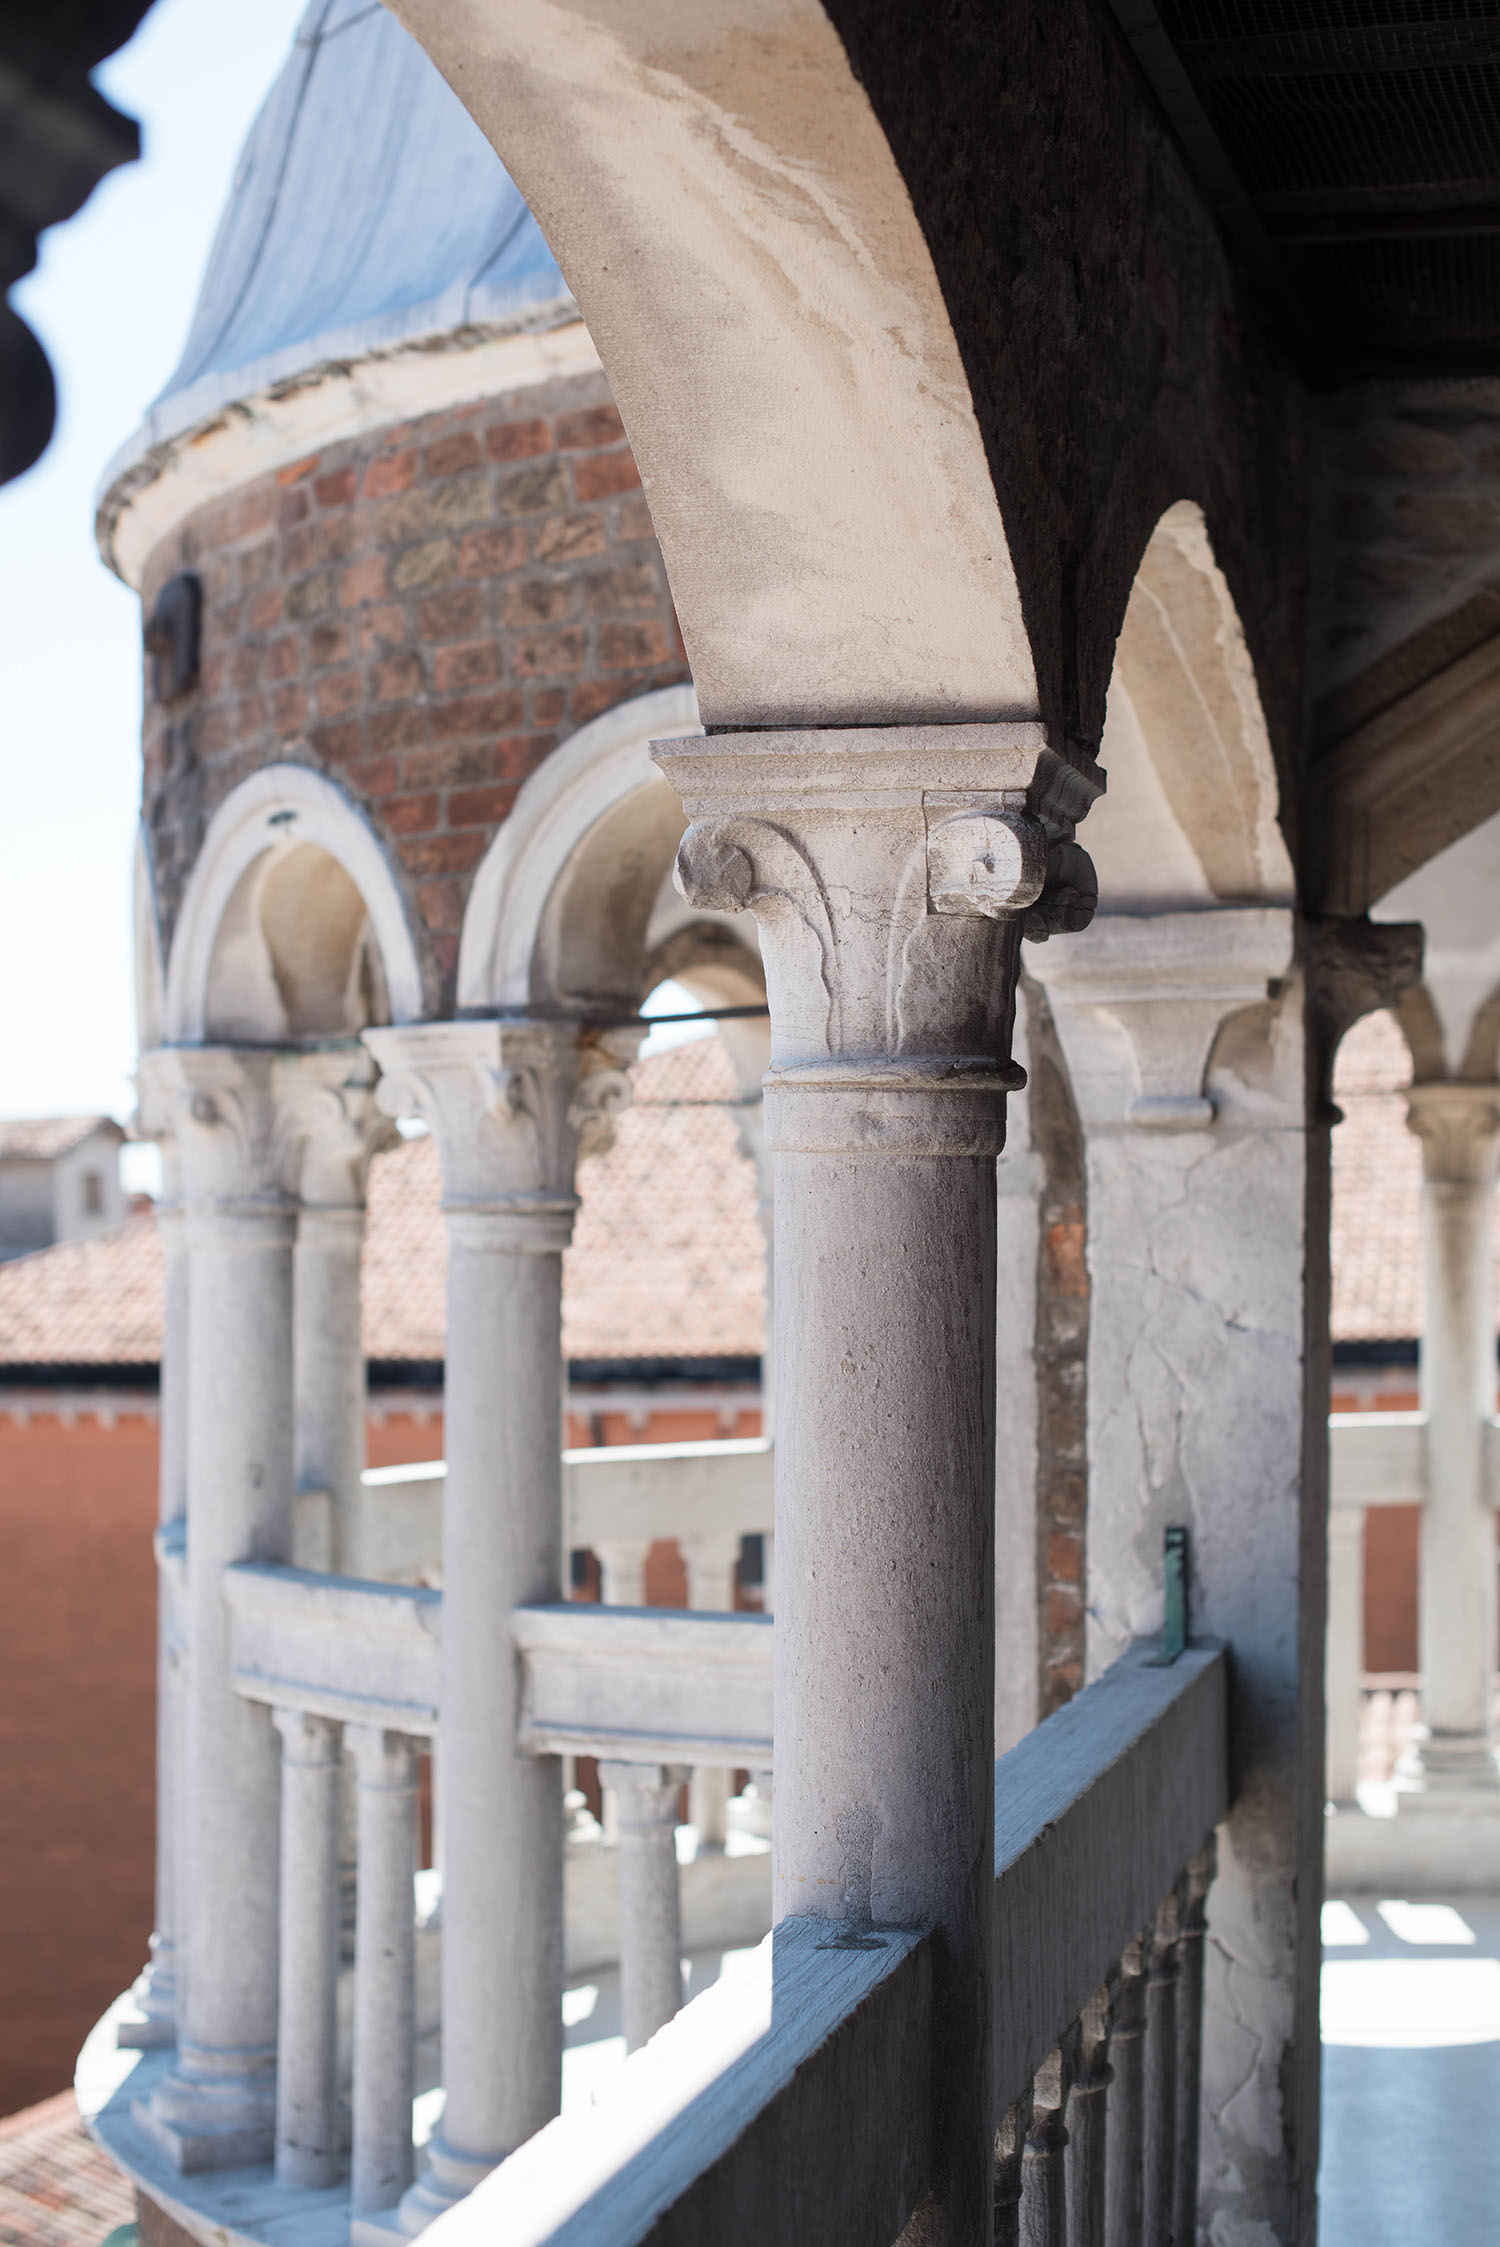 The Scala Contarini de Bovolo in Venice, photographed from inside by Canadian travel blogger Cee Fardoe of Coco & Vera